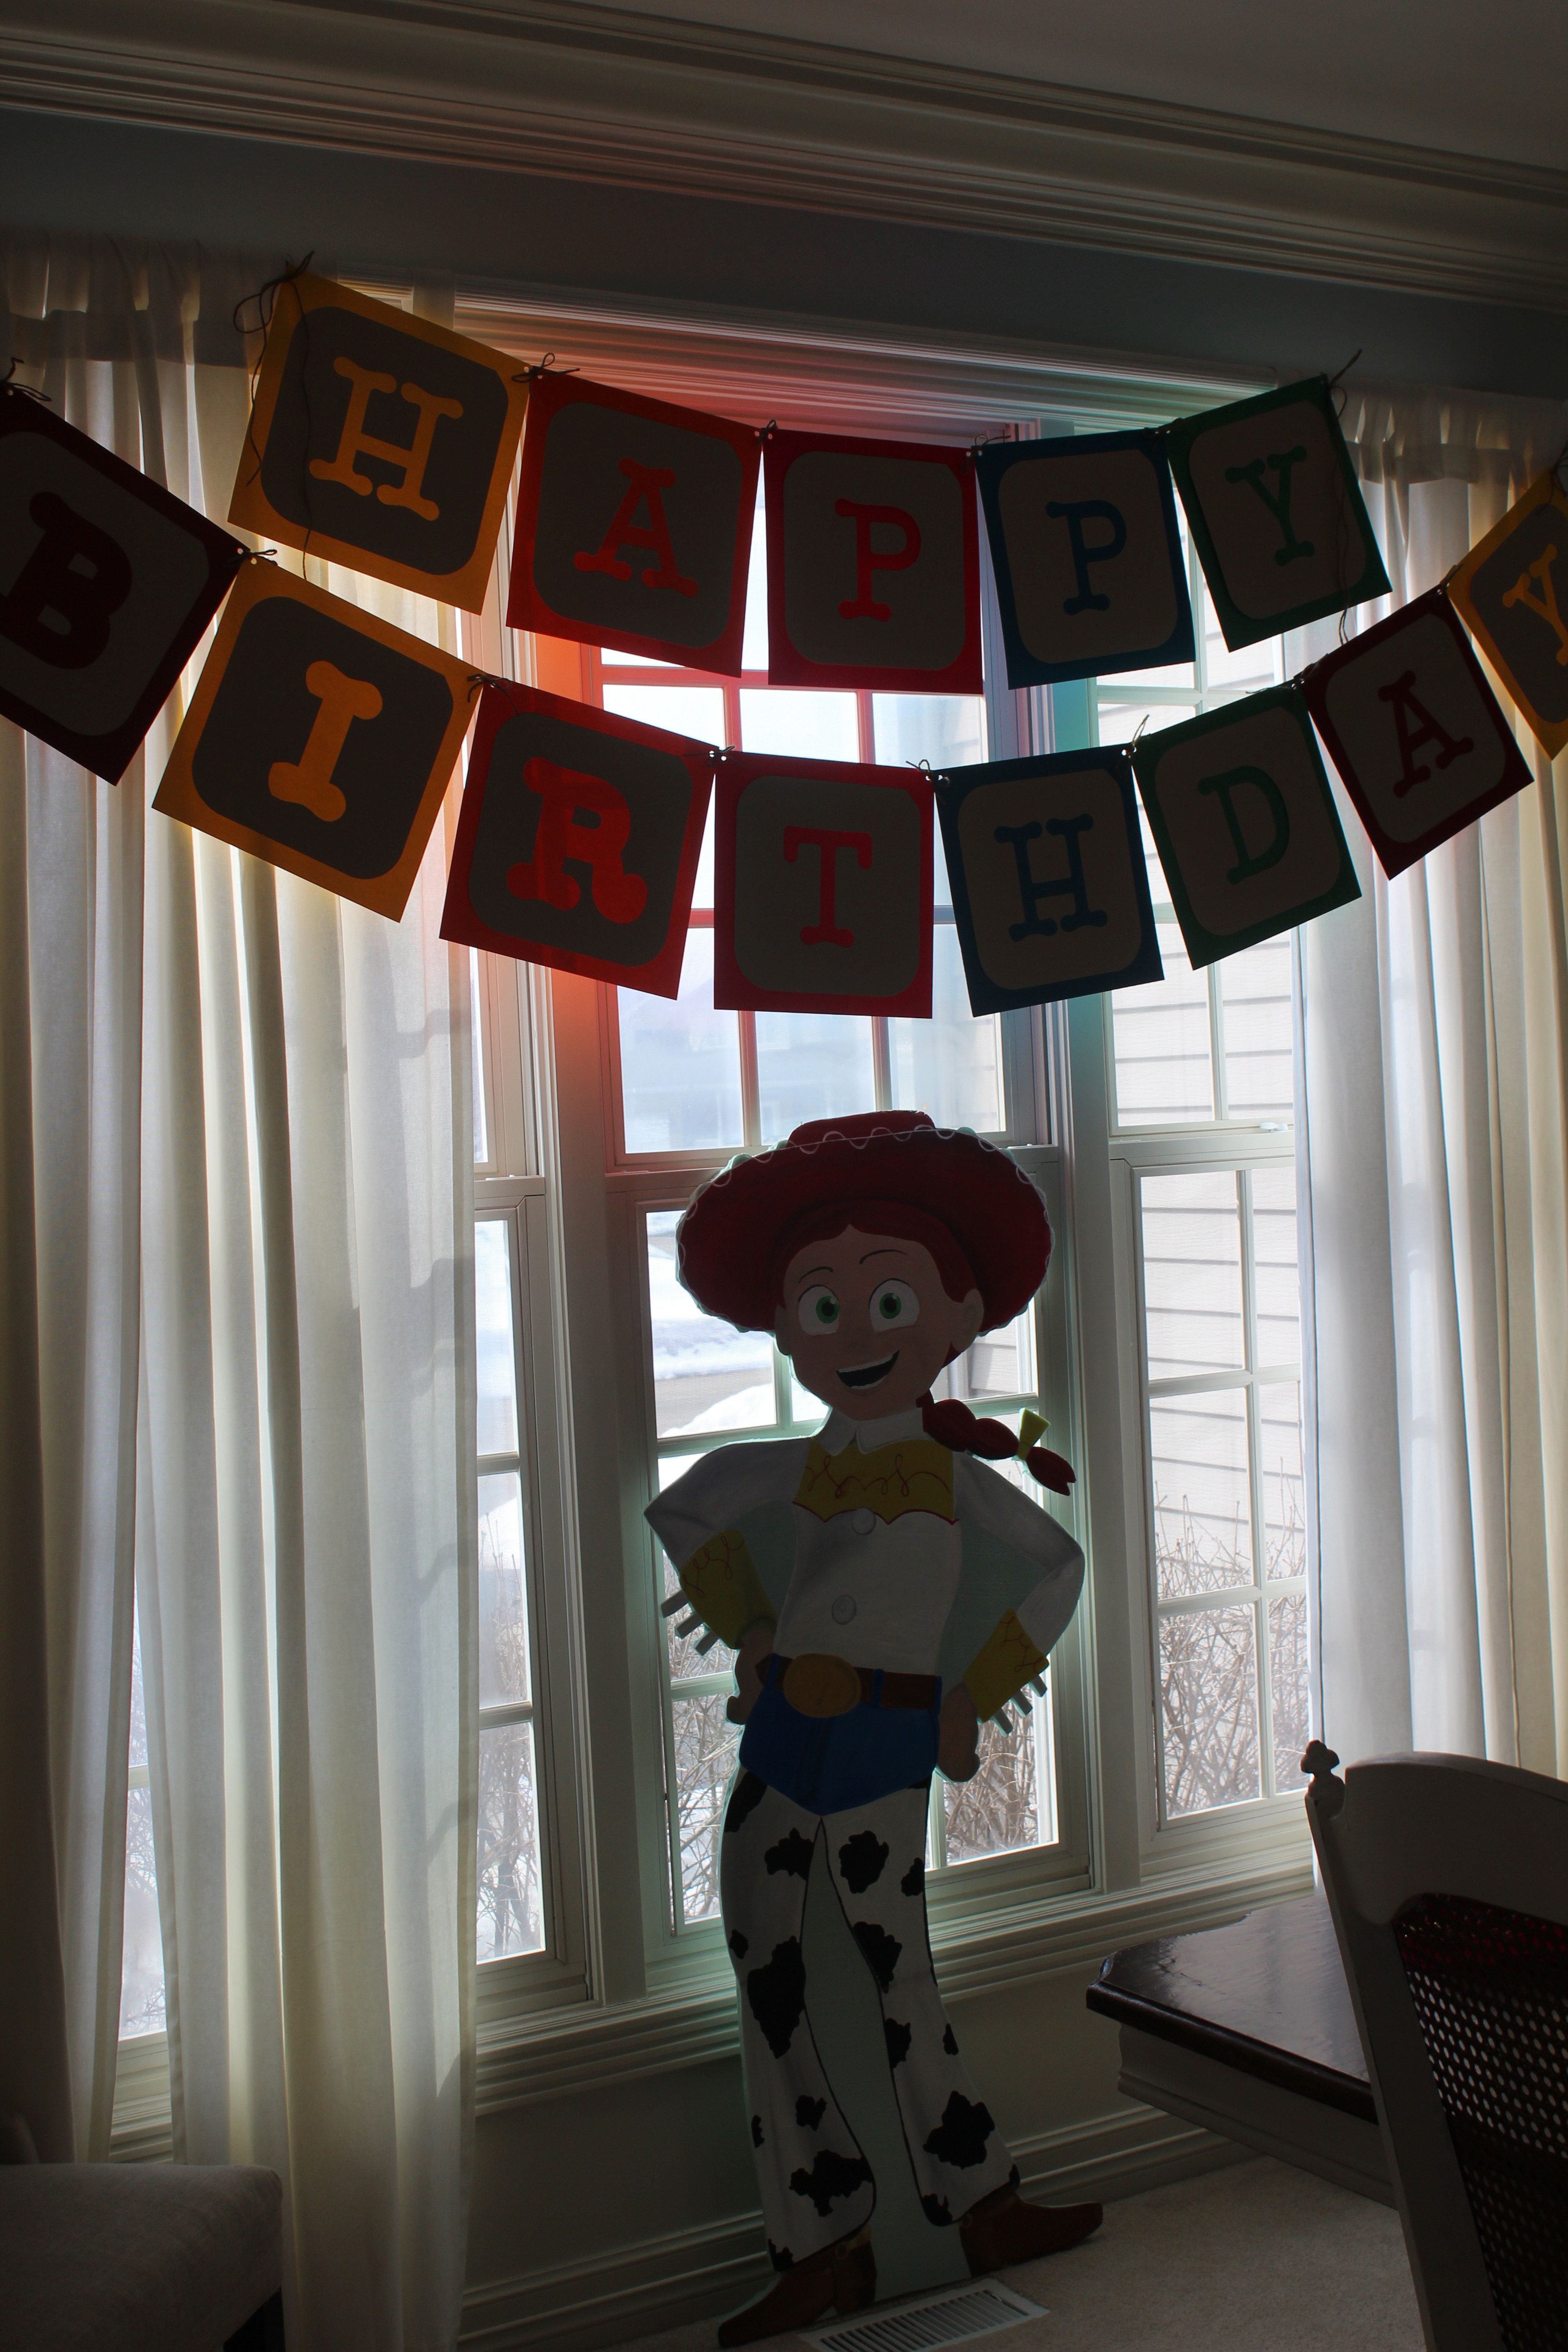 Gavin S Toy Story 3rd Birthday Party